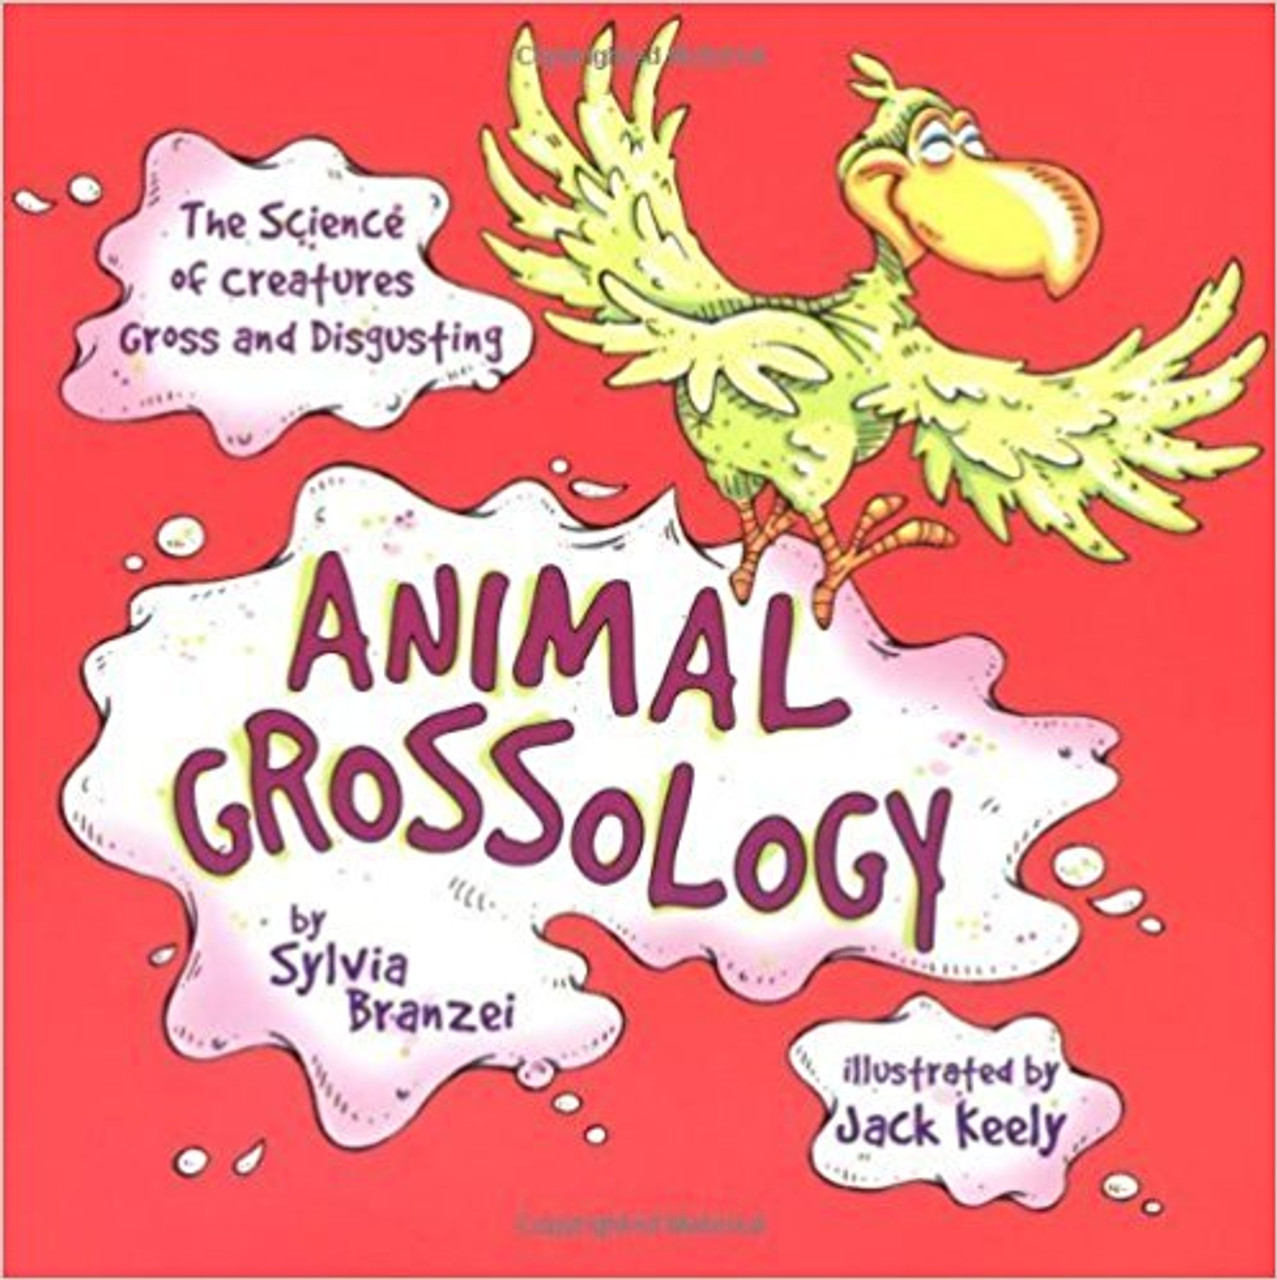 Animal Grossology by Sylvia Branzel